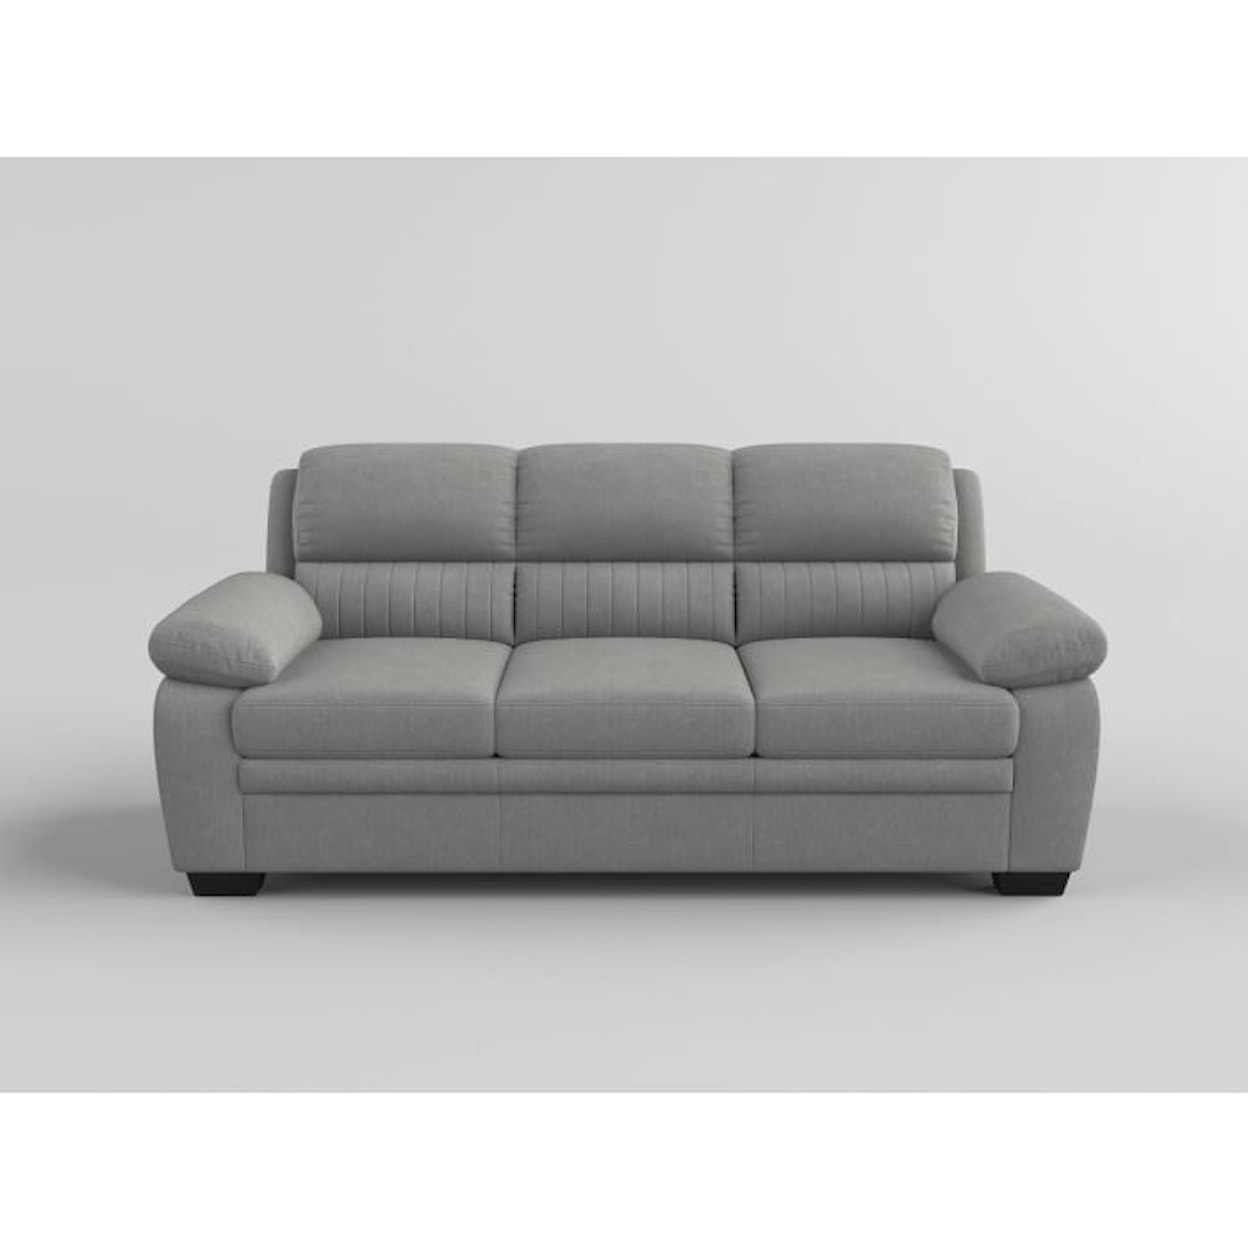 Homelegance Furniture Holleman Sofa